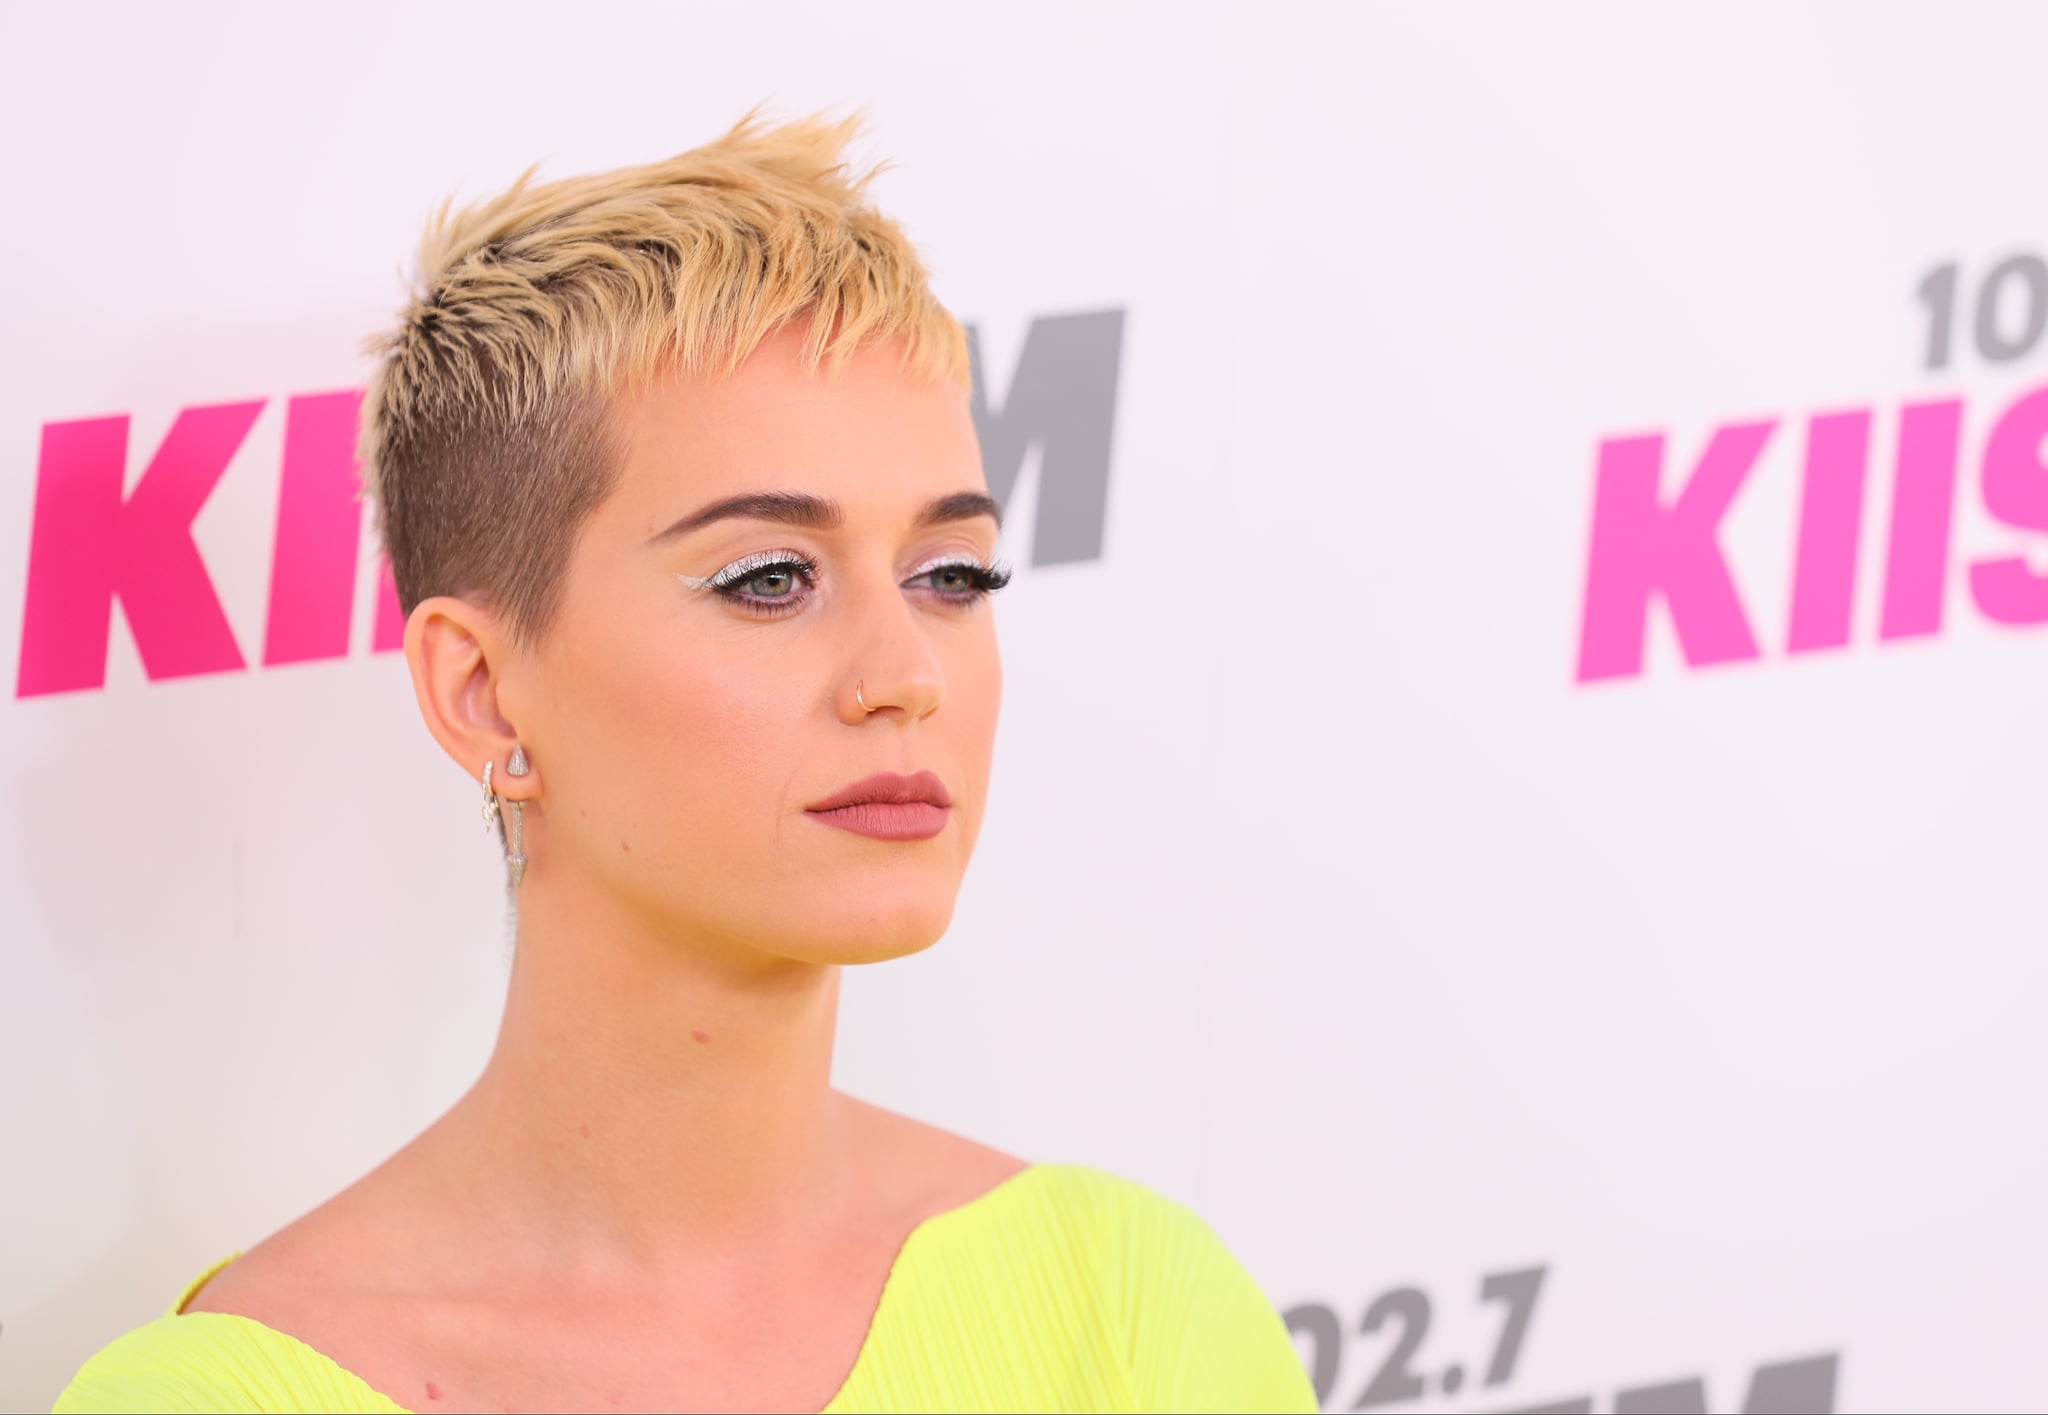 Katy Perry Explains Why She Cut Her Hair | POPSUGAR Beauty